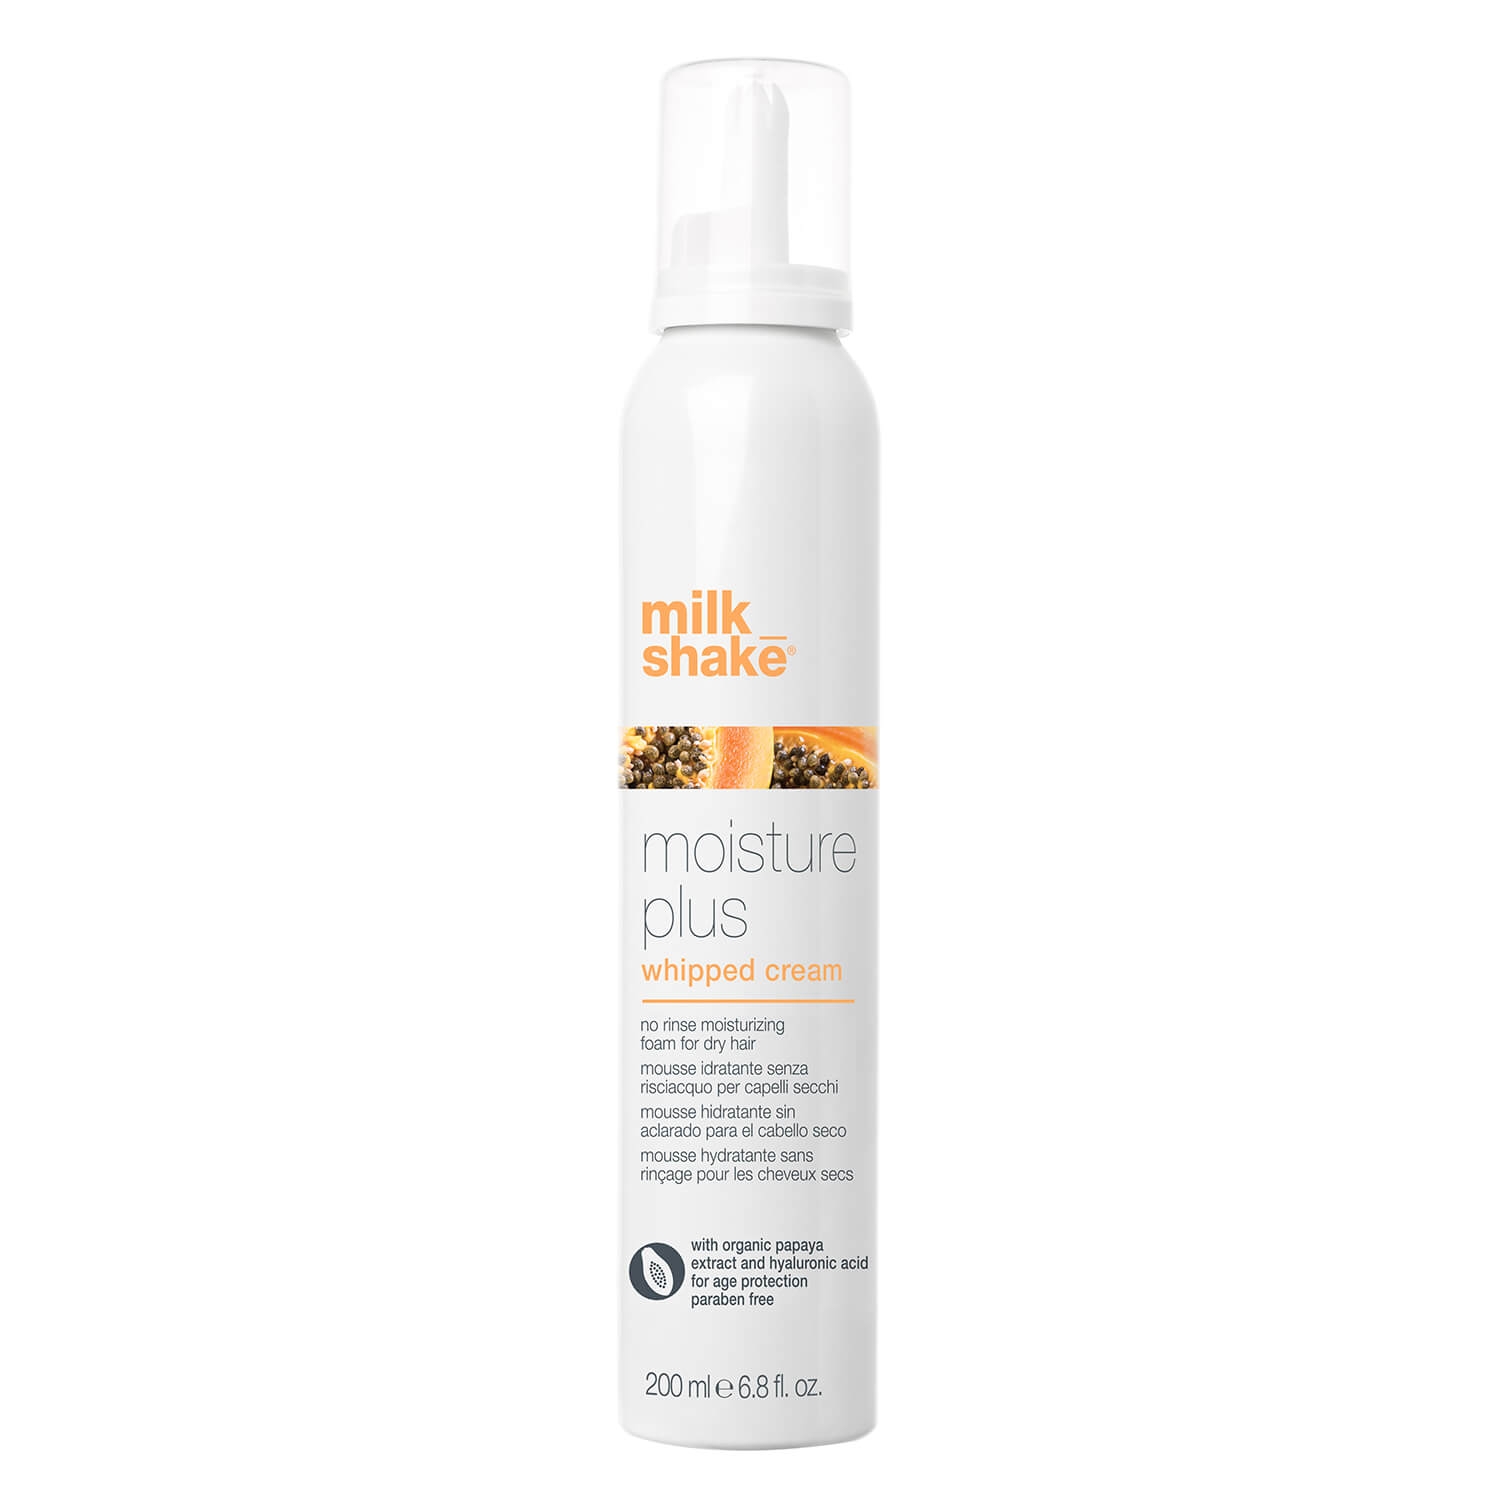 Product image from milk_shake moisture plus - whipped cream